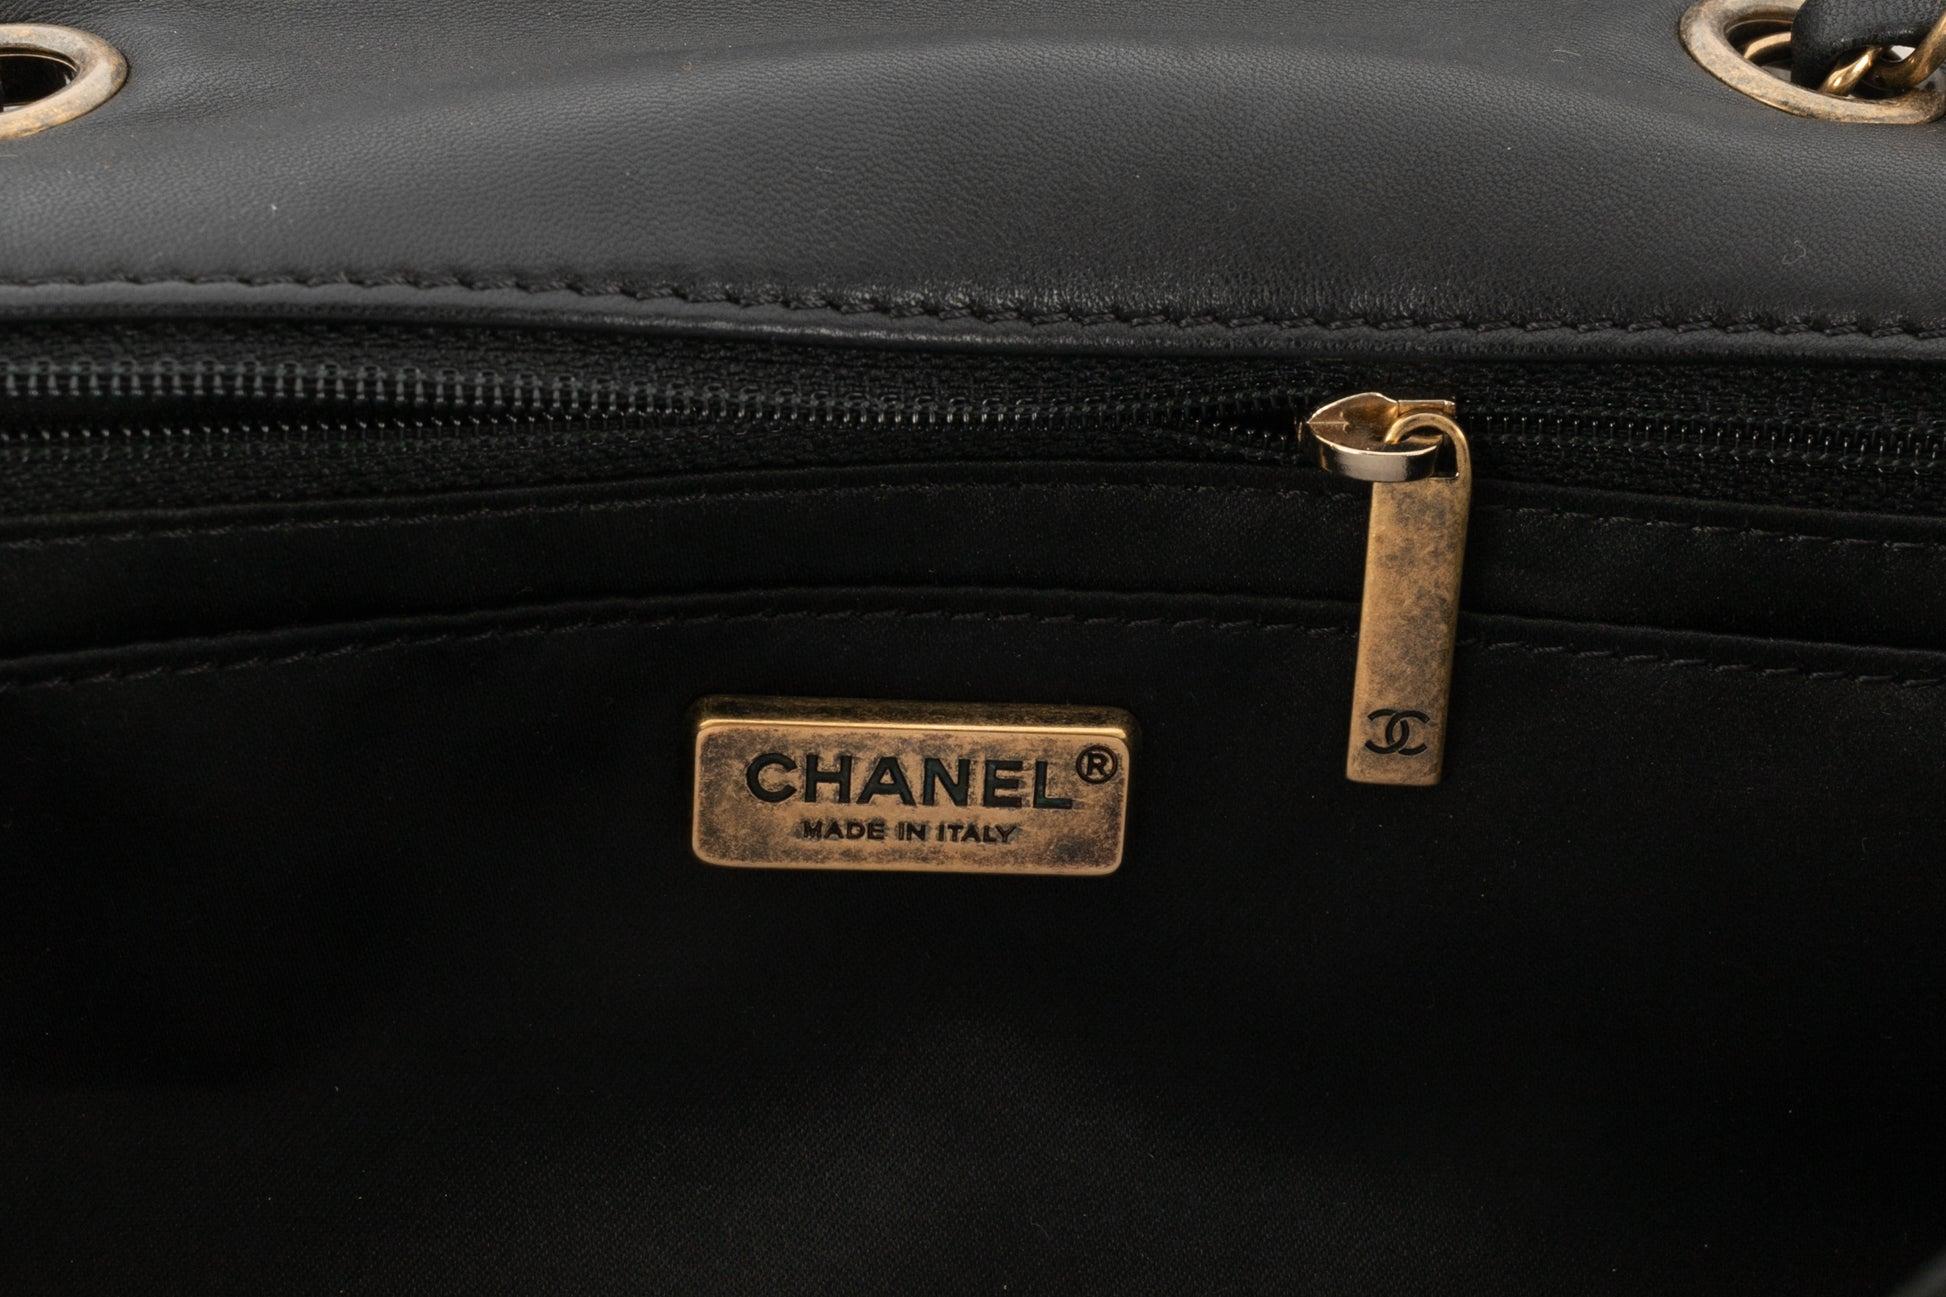 Chanel Timeless Bag Covered in Sequins, Black Leather & Gold Metal Details, 2017 6